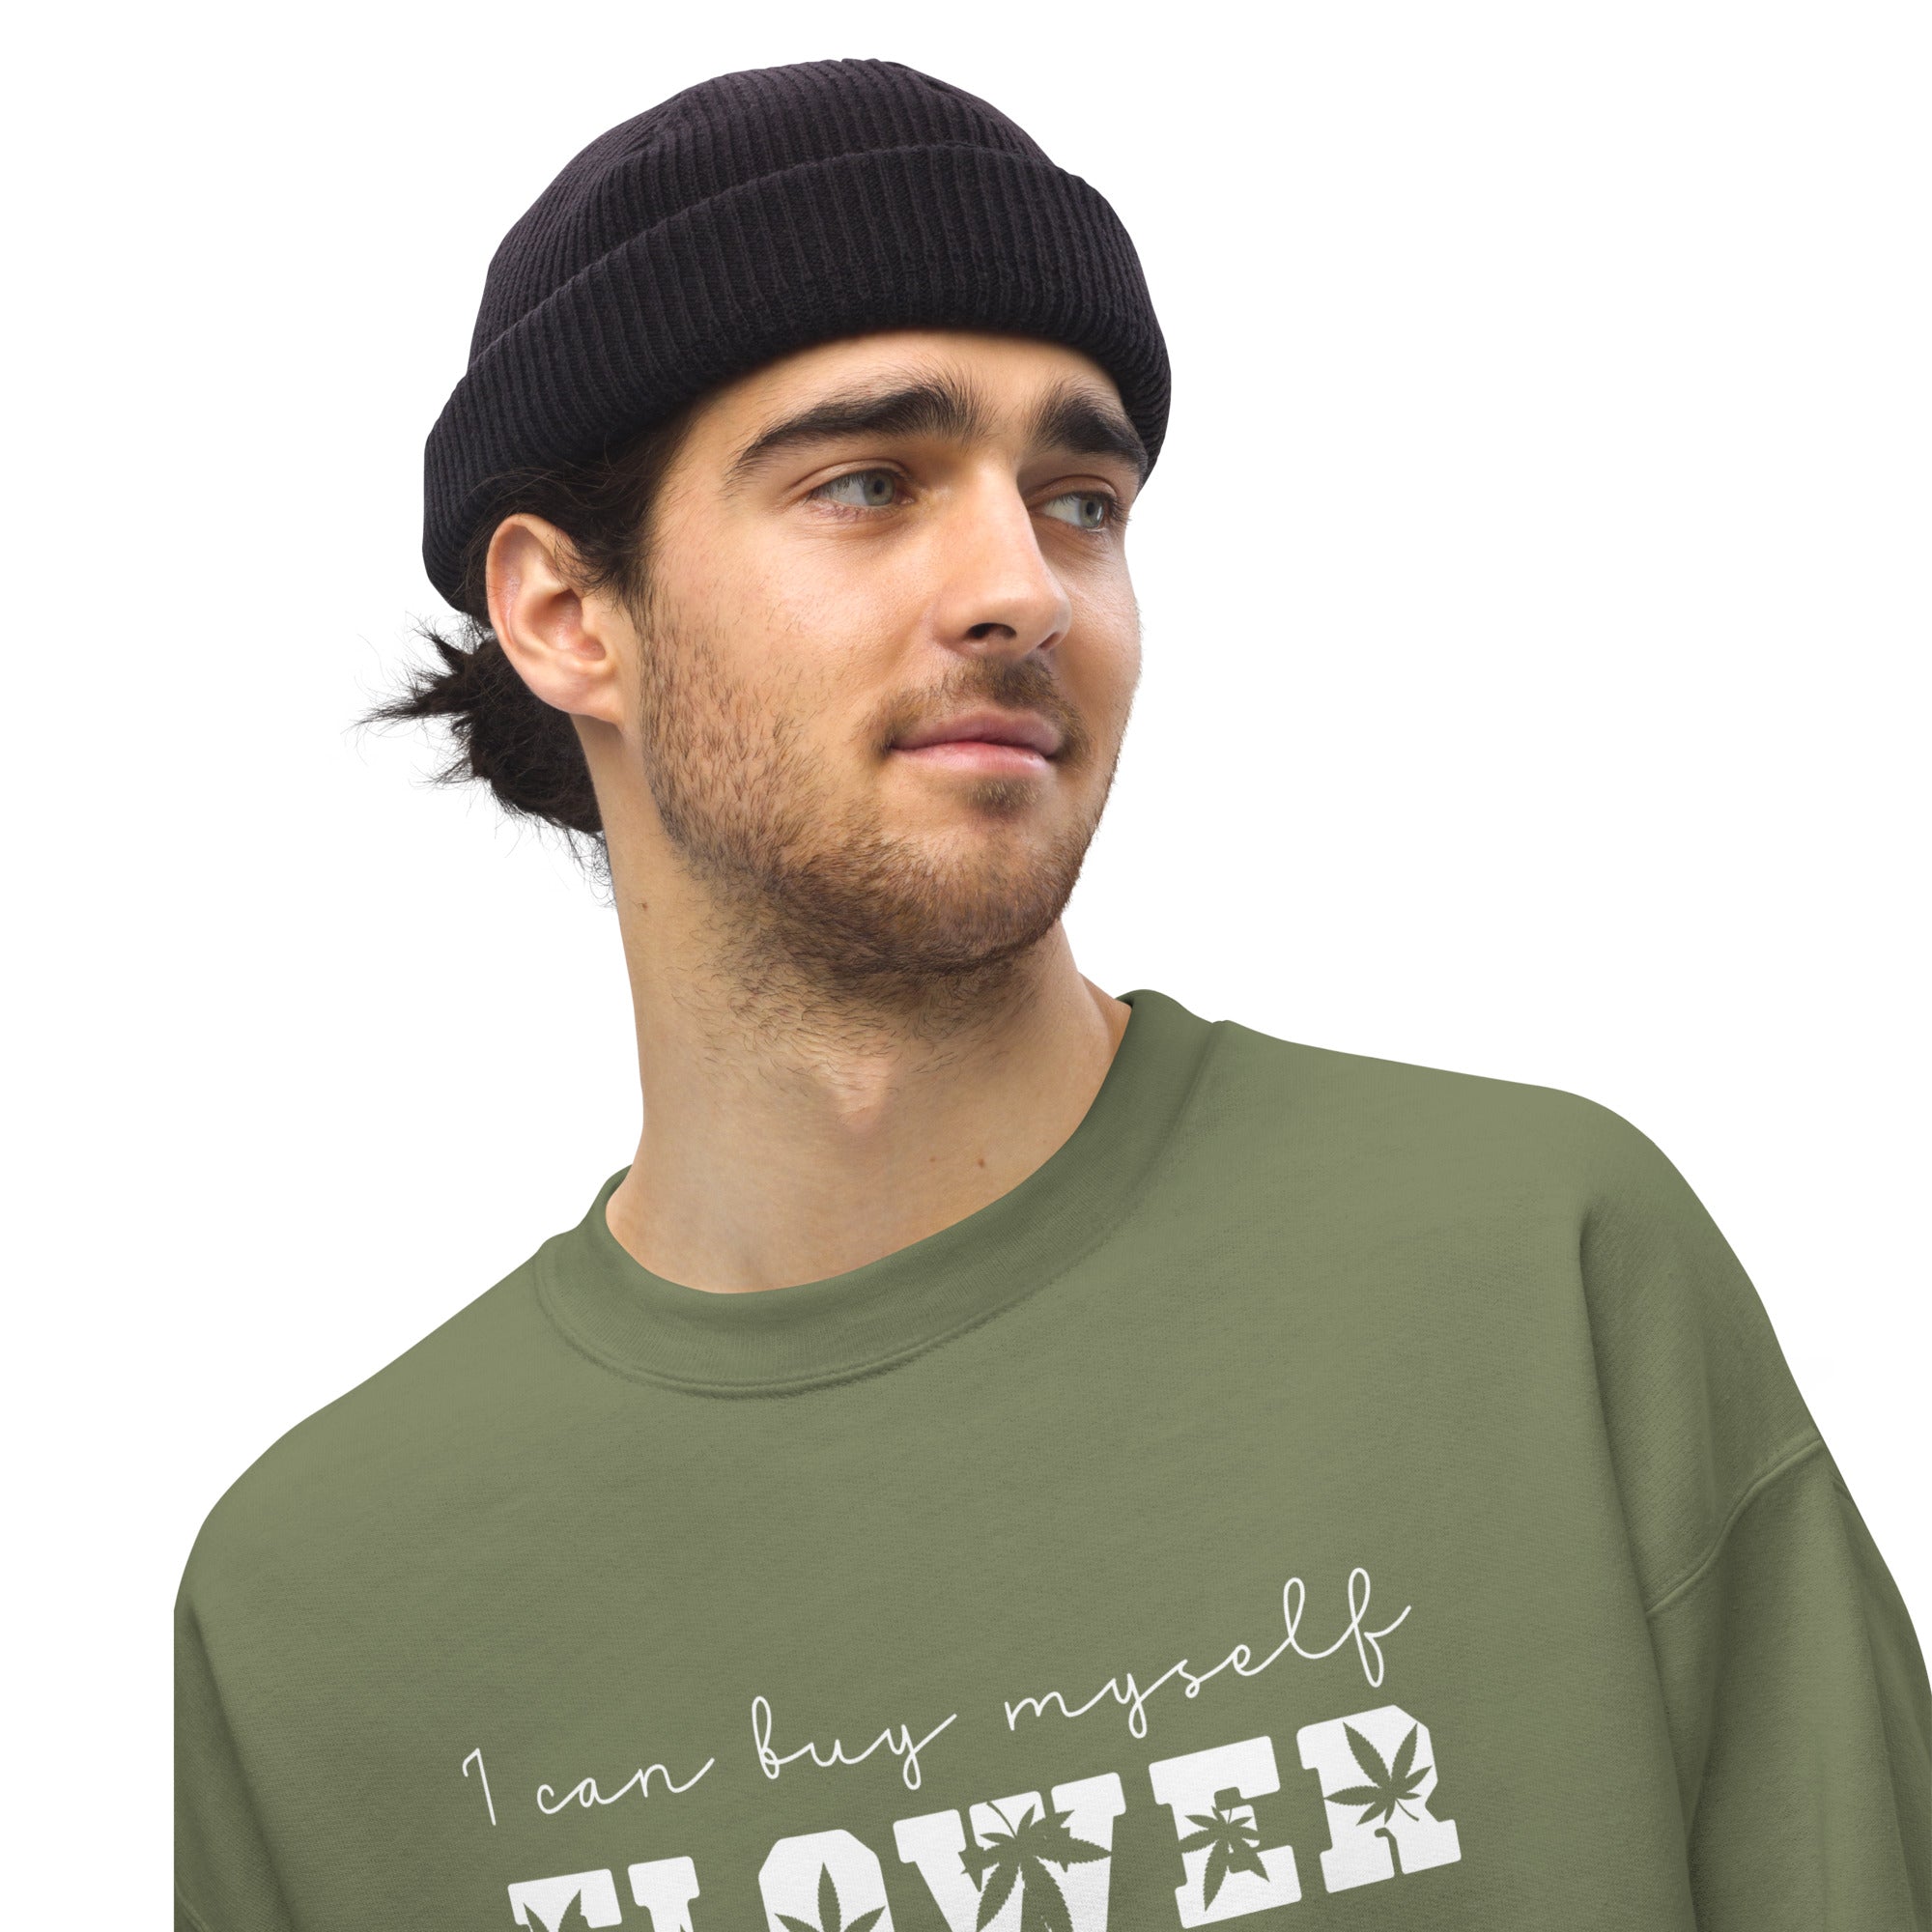 I Can Buy Myself Flower 420 Friendly Green Crewneck Sweatshirt printful